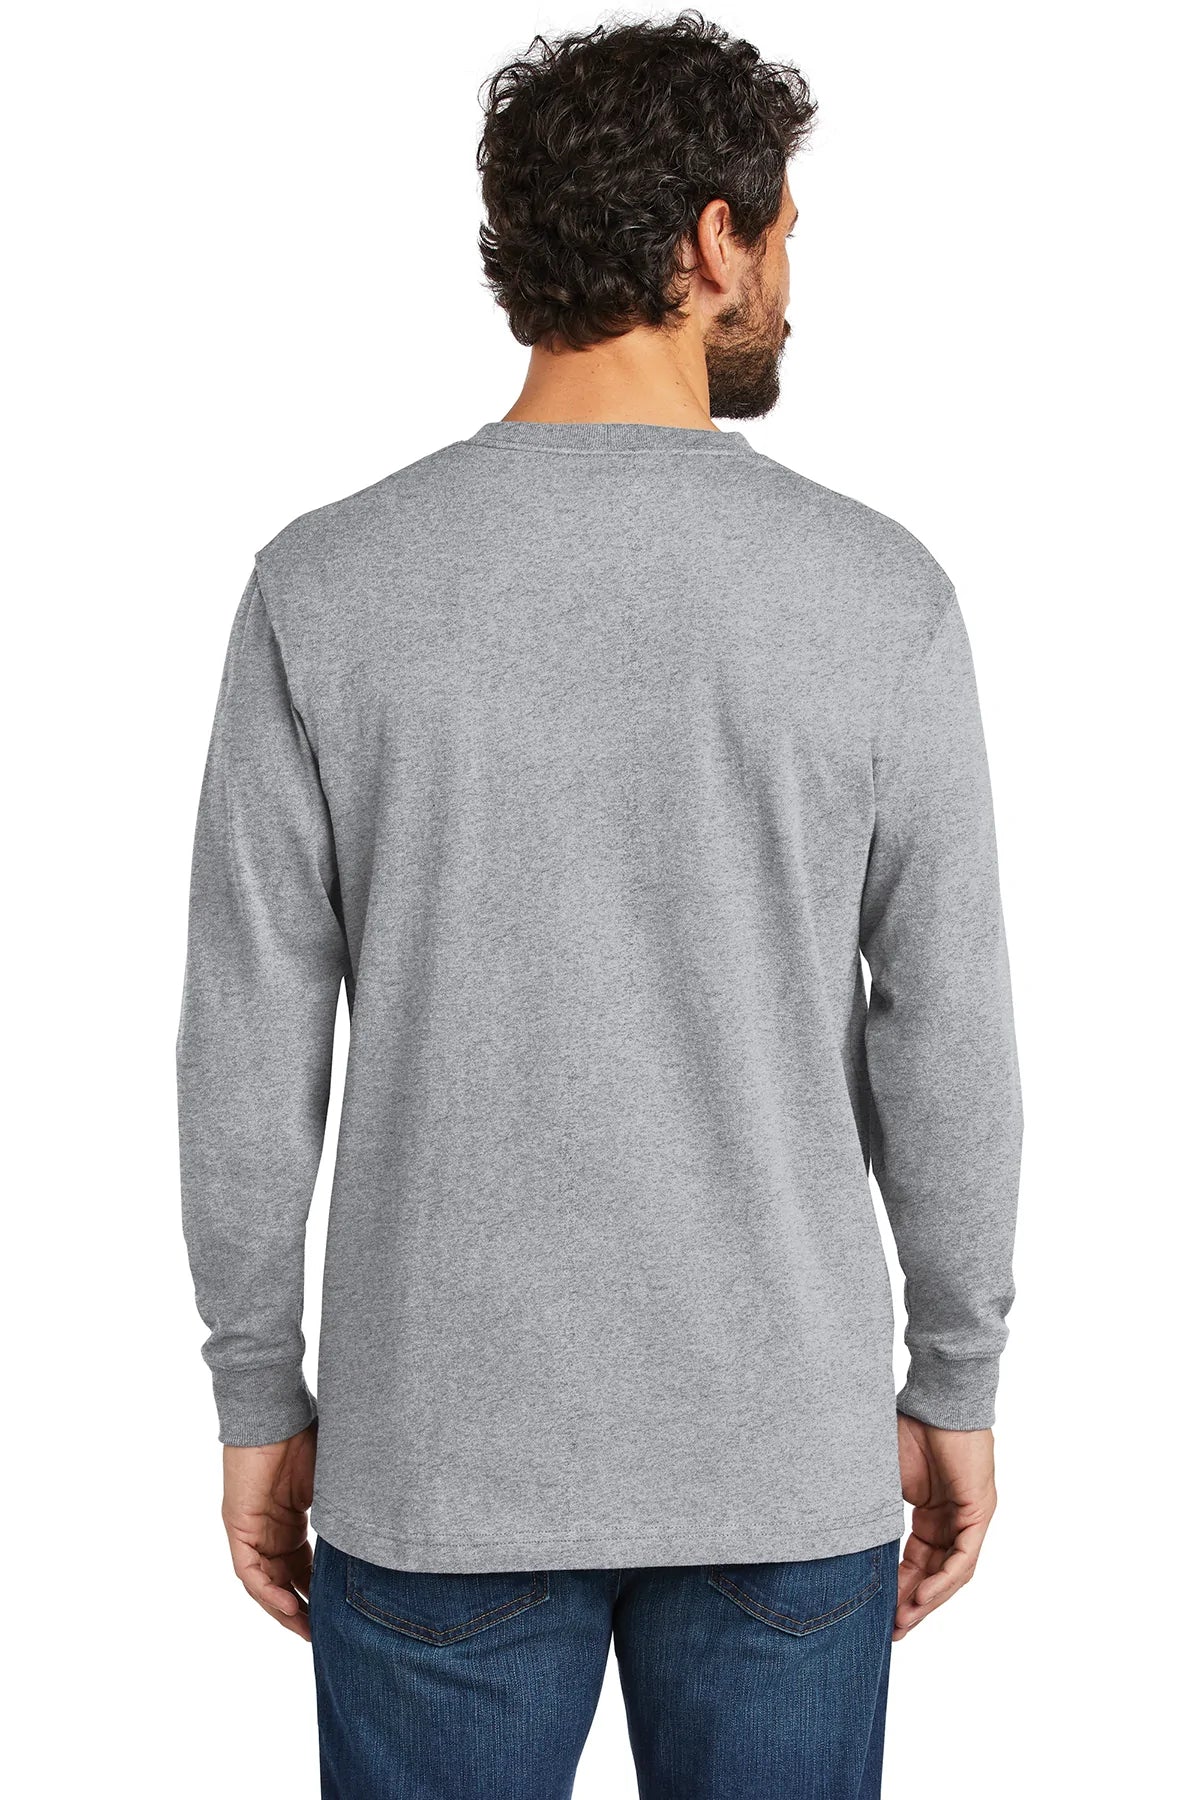 carhartt workwear pocket long sleeve t-shirt ctk126 heather grey